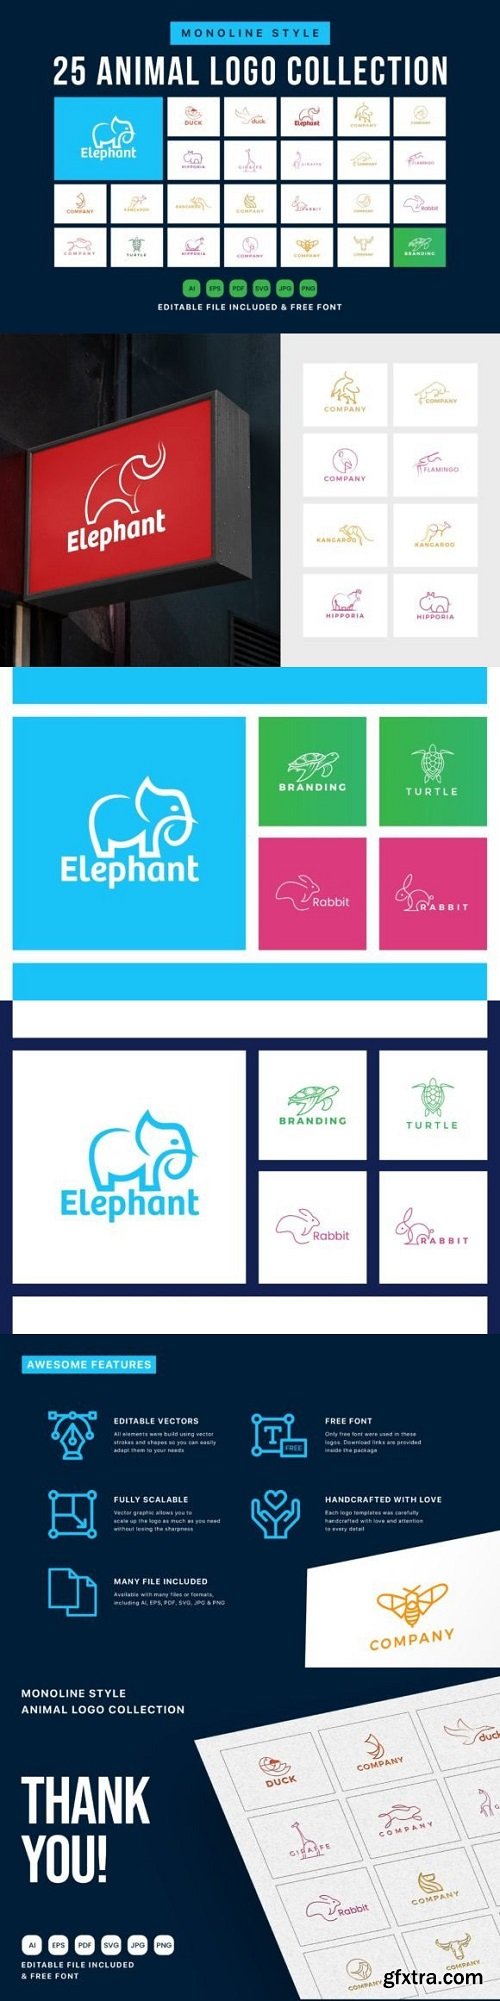 25 Animal Logo Collections